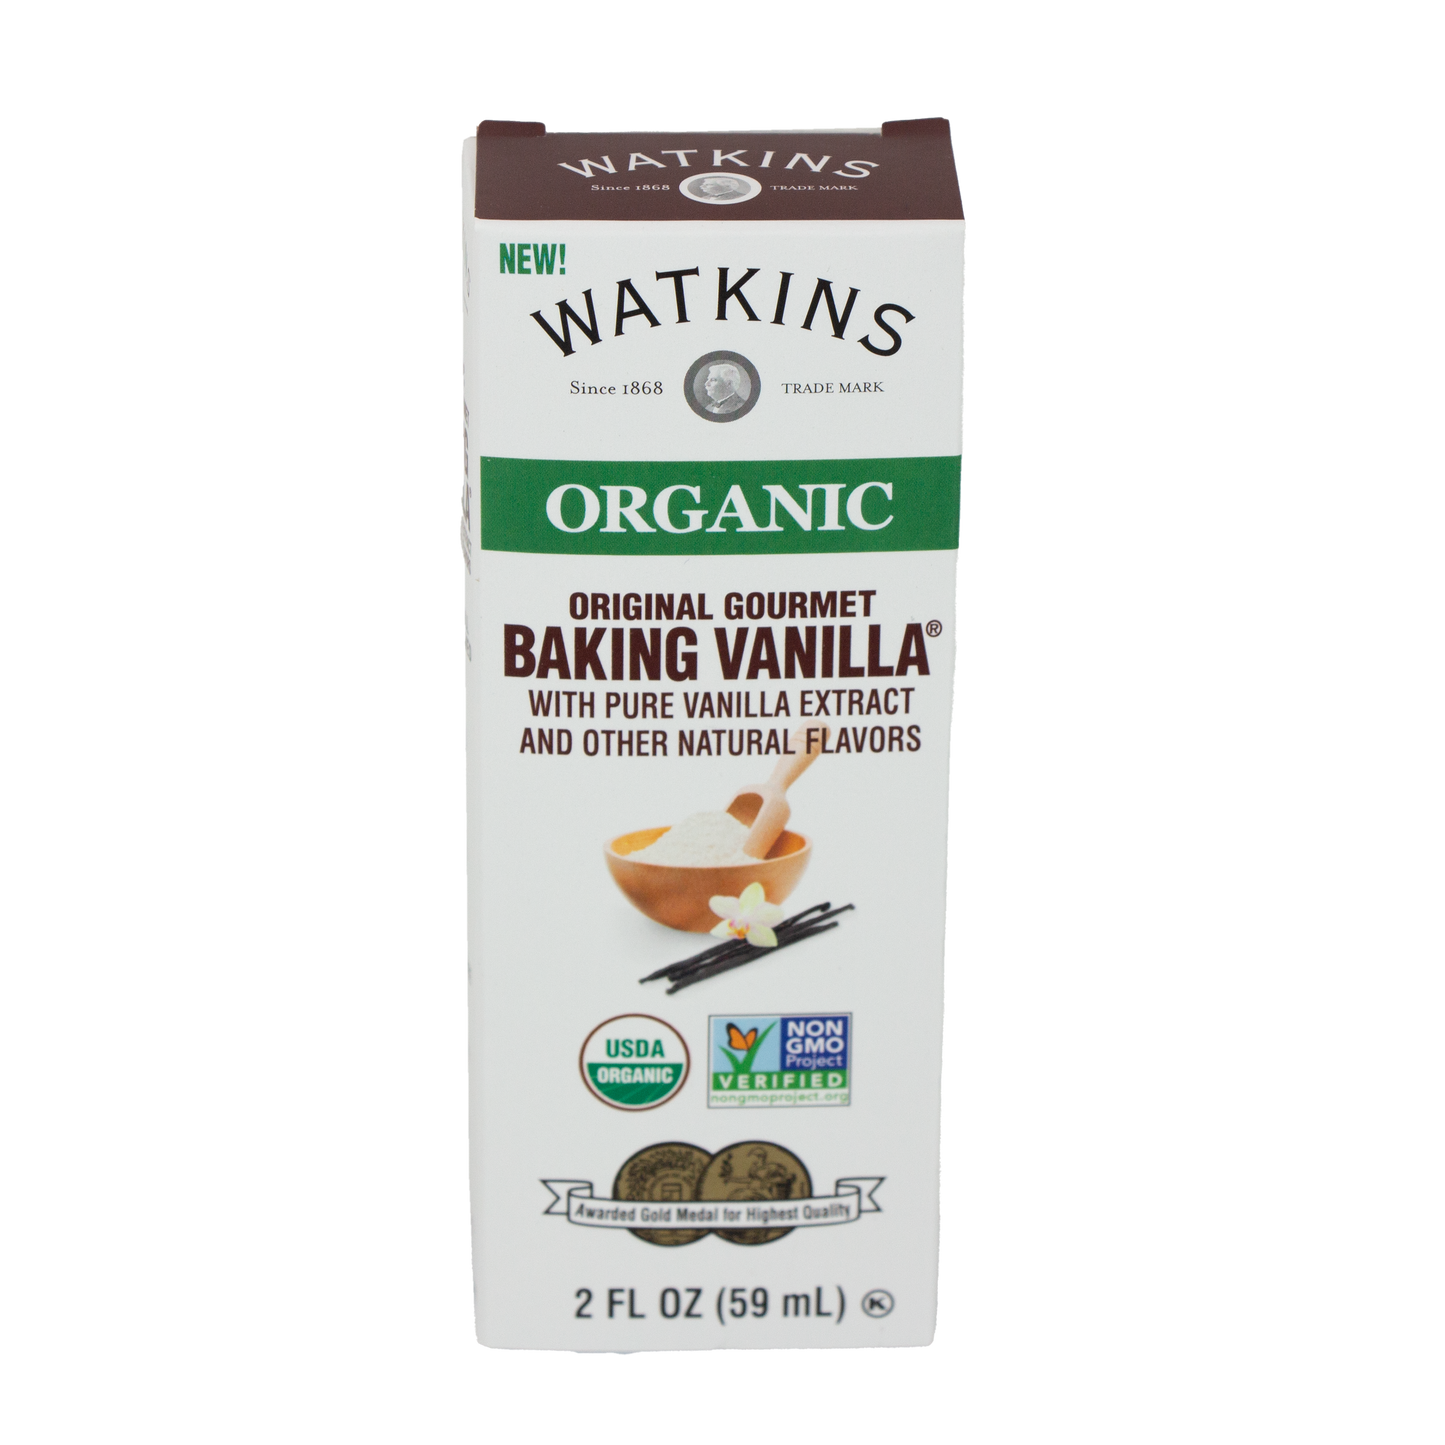 Watkins - Organic Baking Vanilla